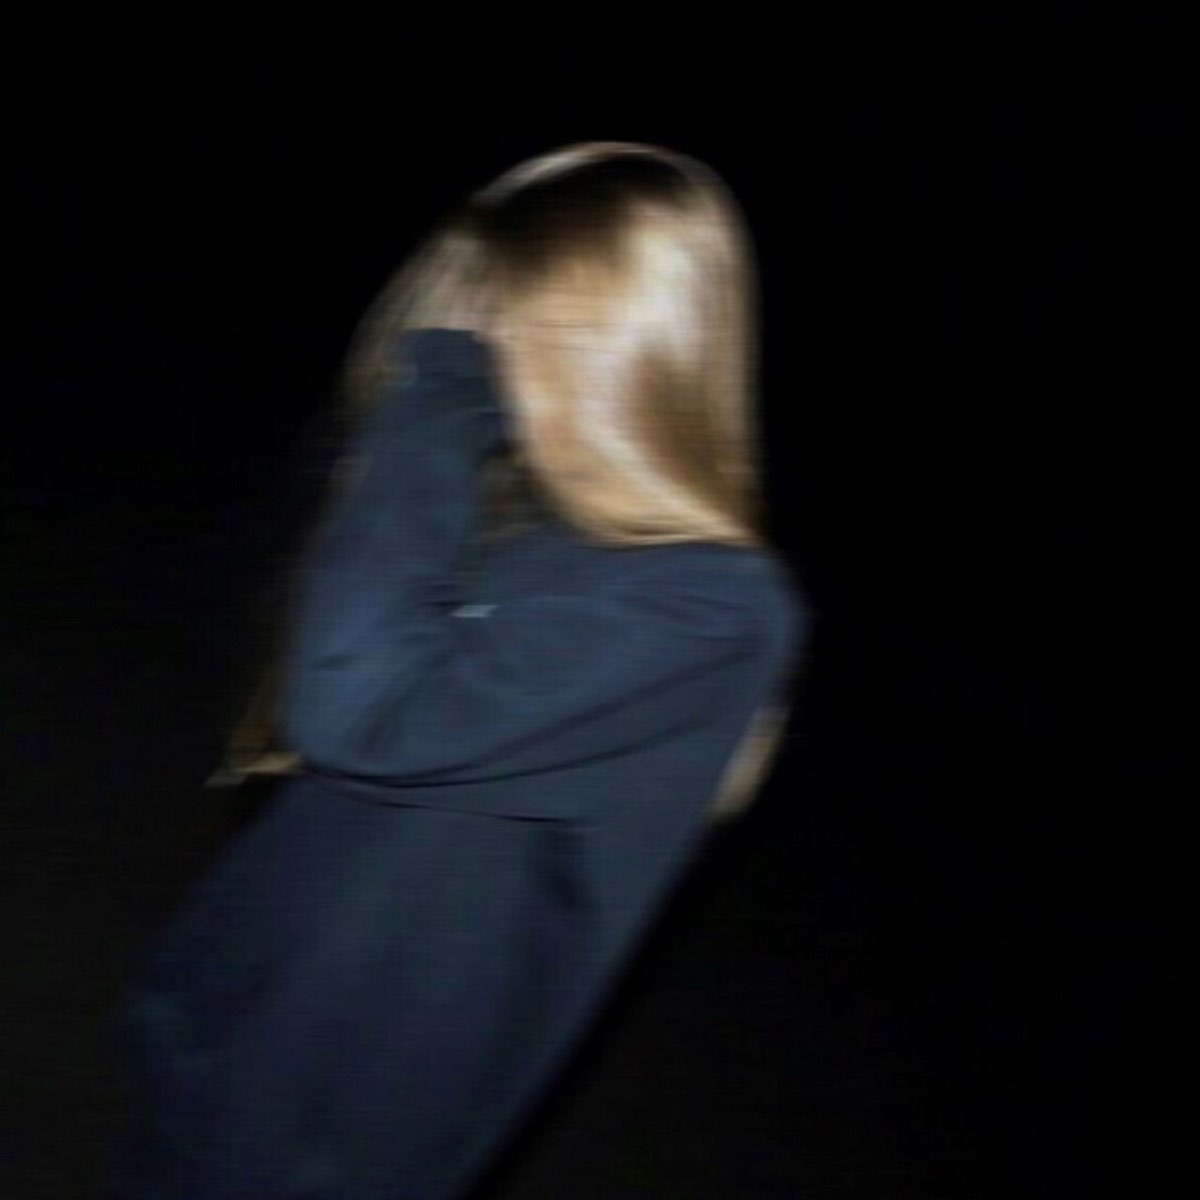 Фото девушки на аву без лица в темноте